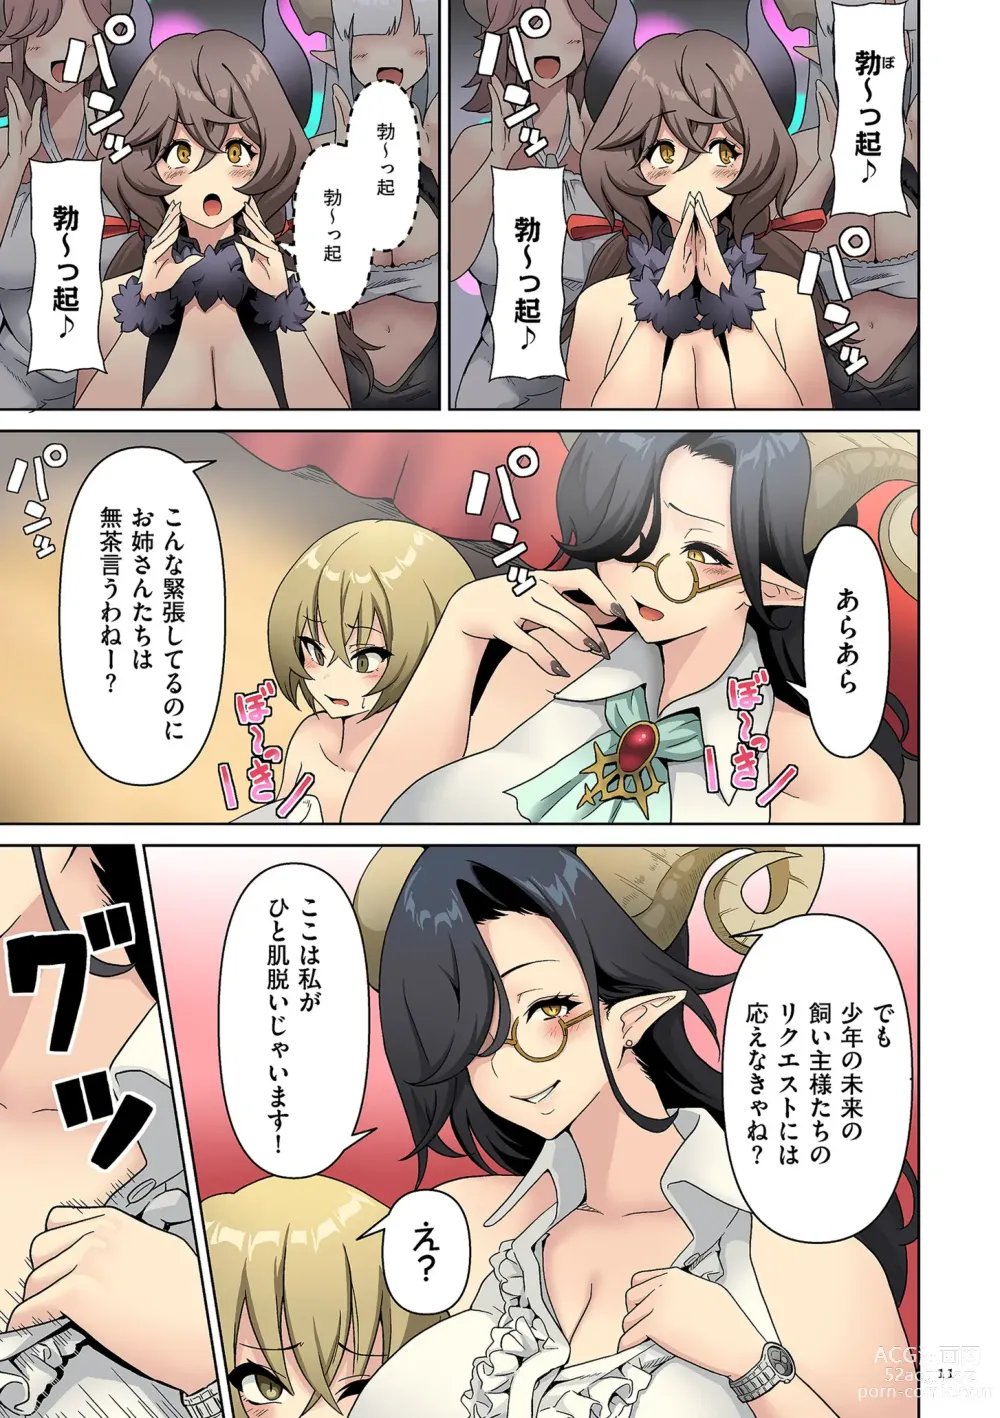 Page 11 of manga Succubus Kingdom